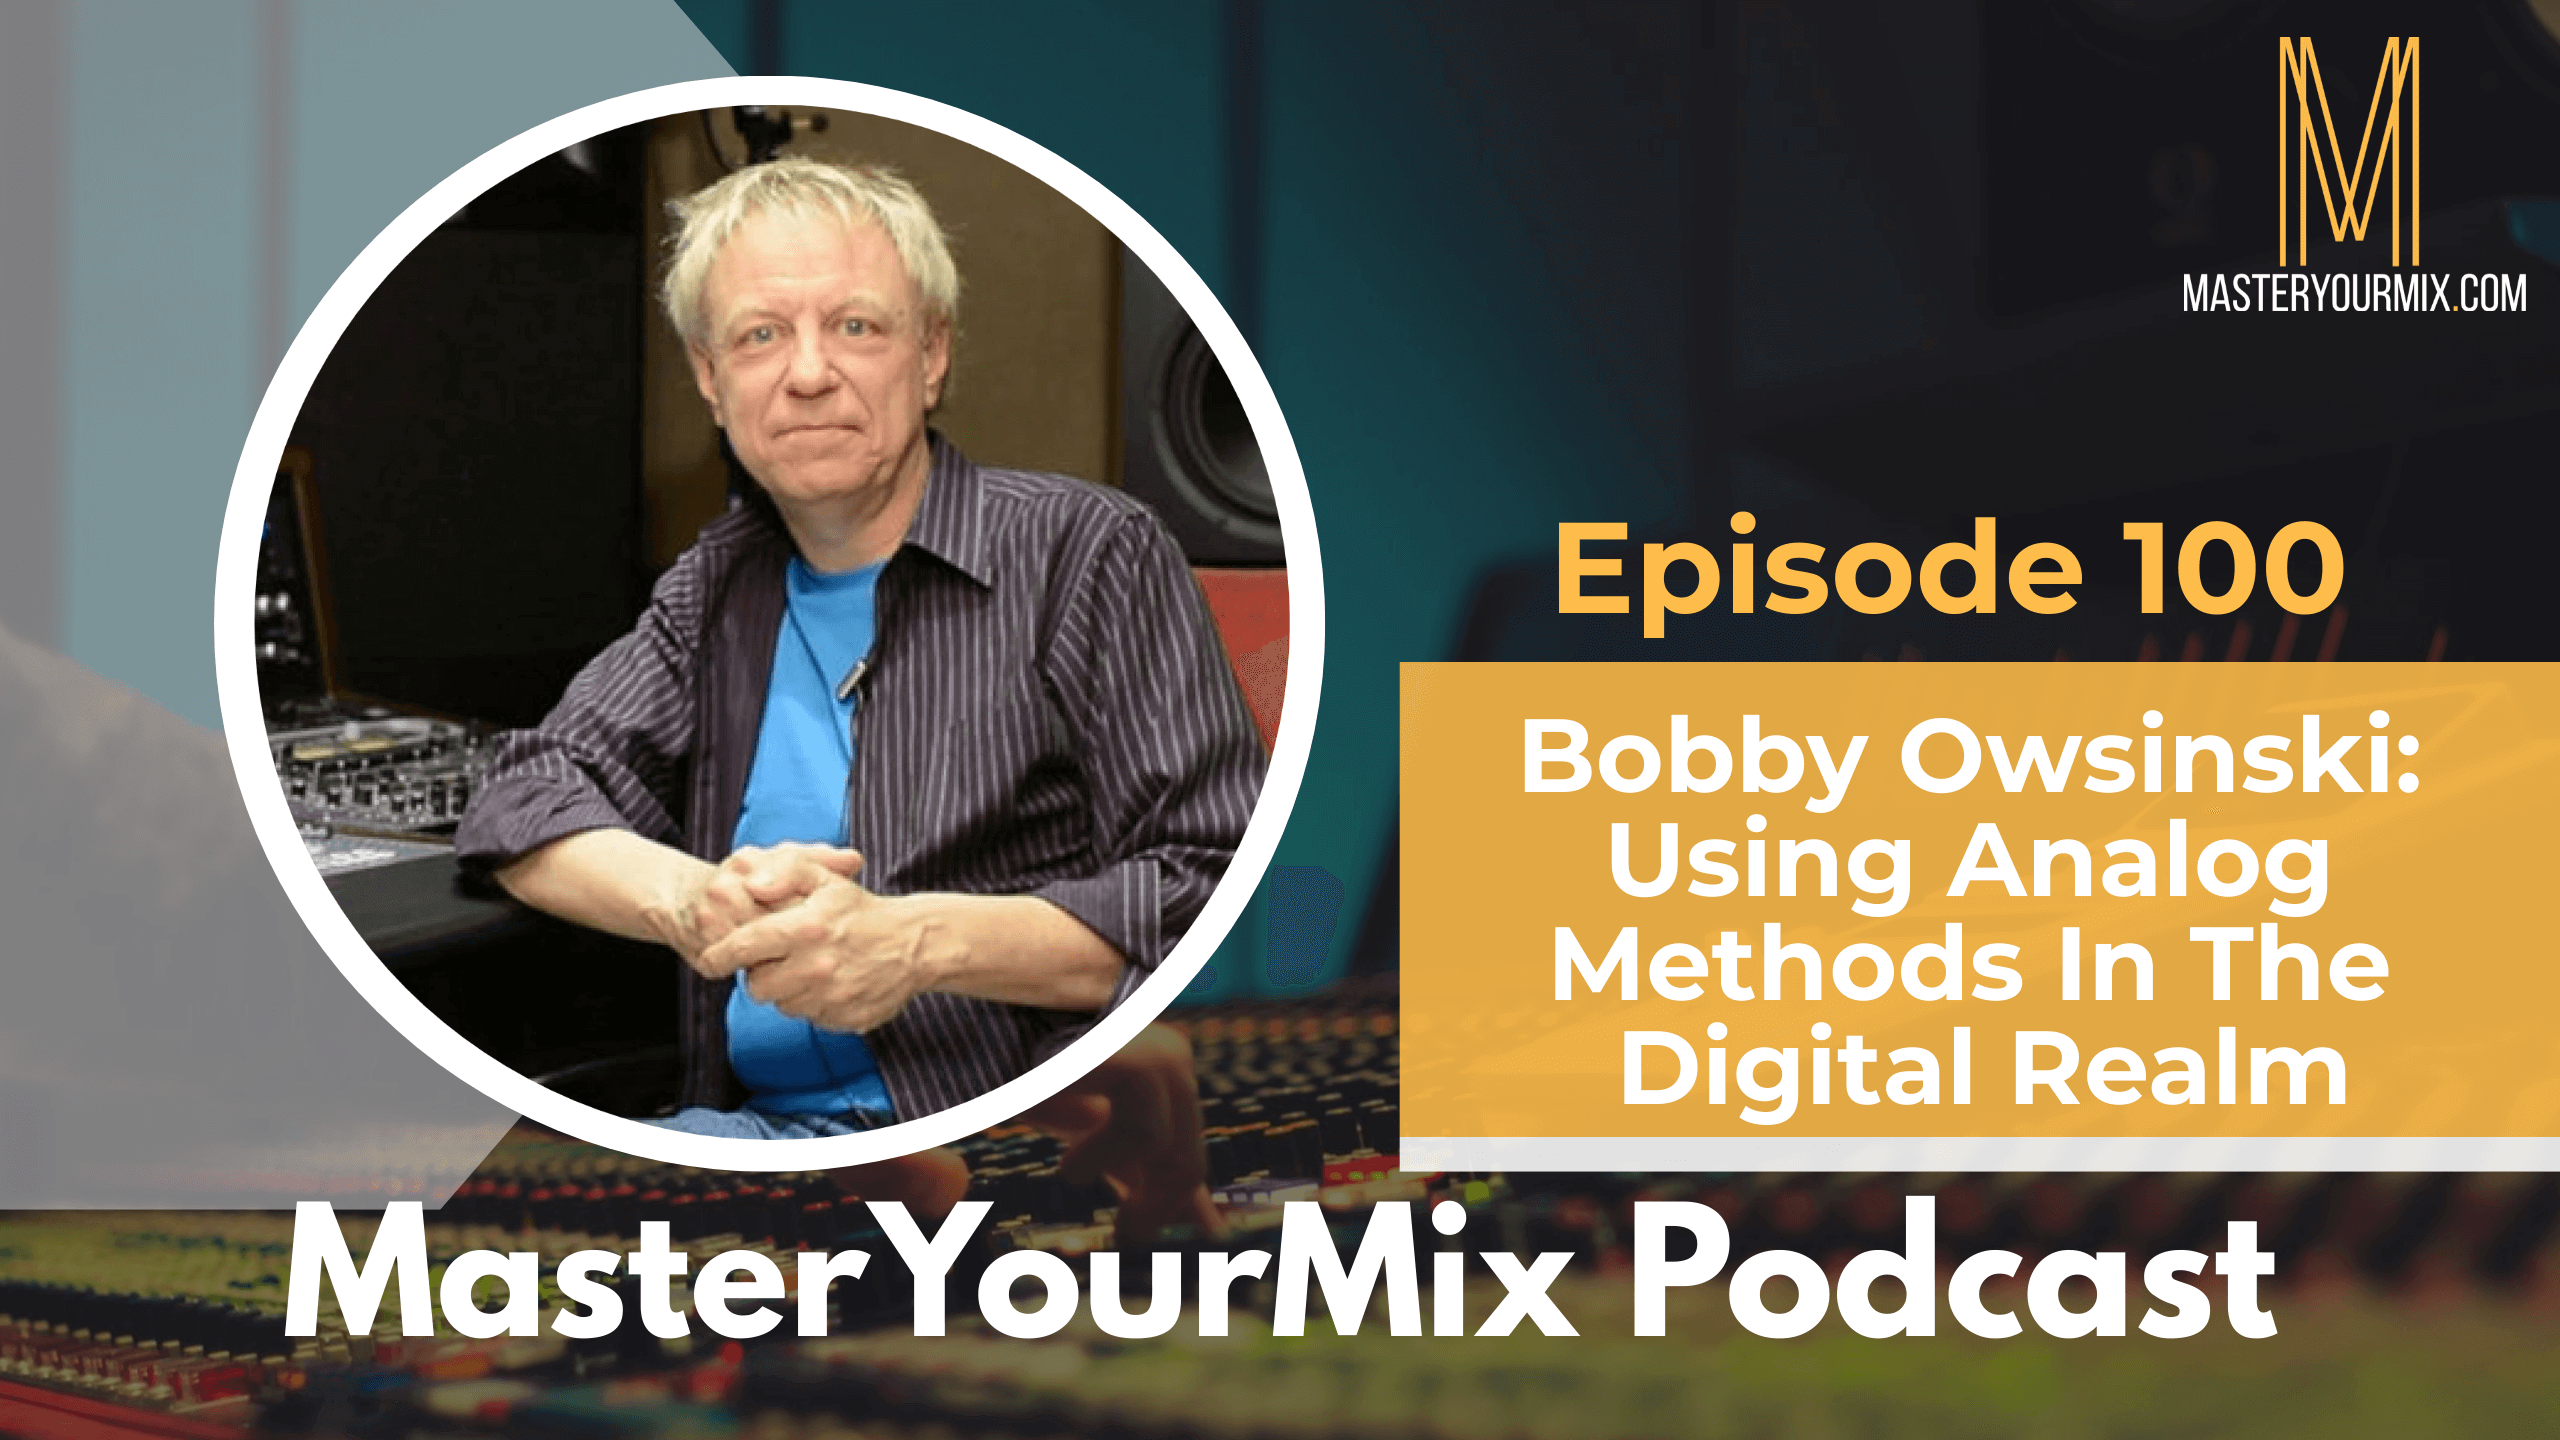 master your mix podcast ep 100, Bobby Owsinski